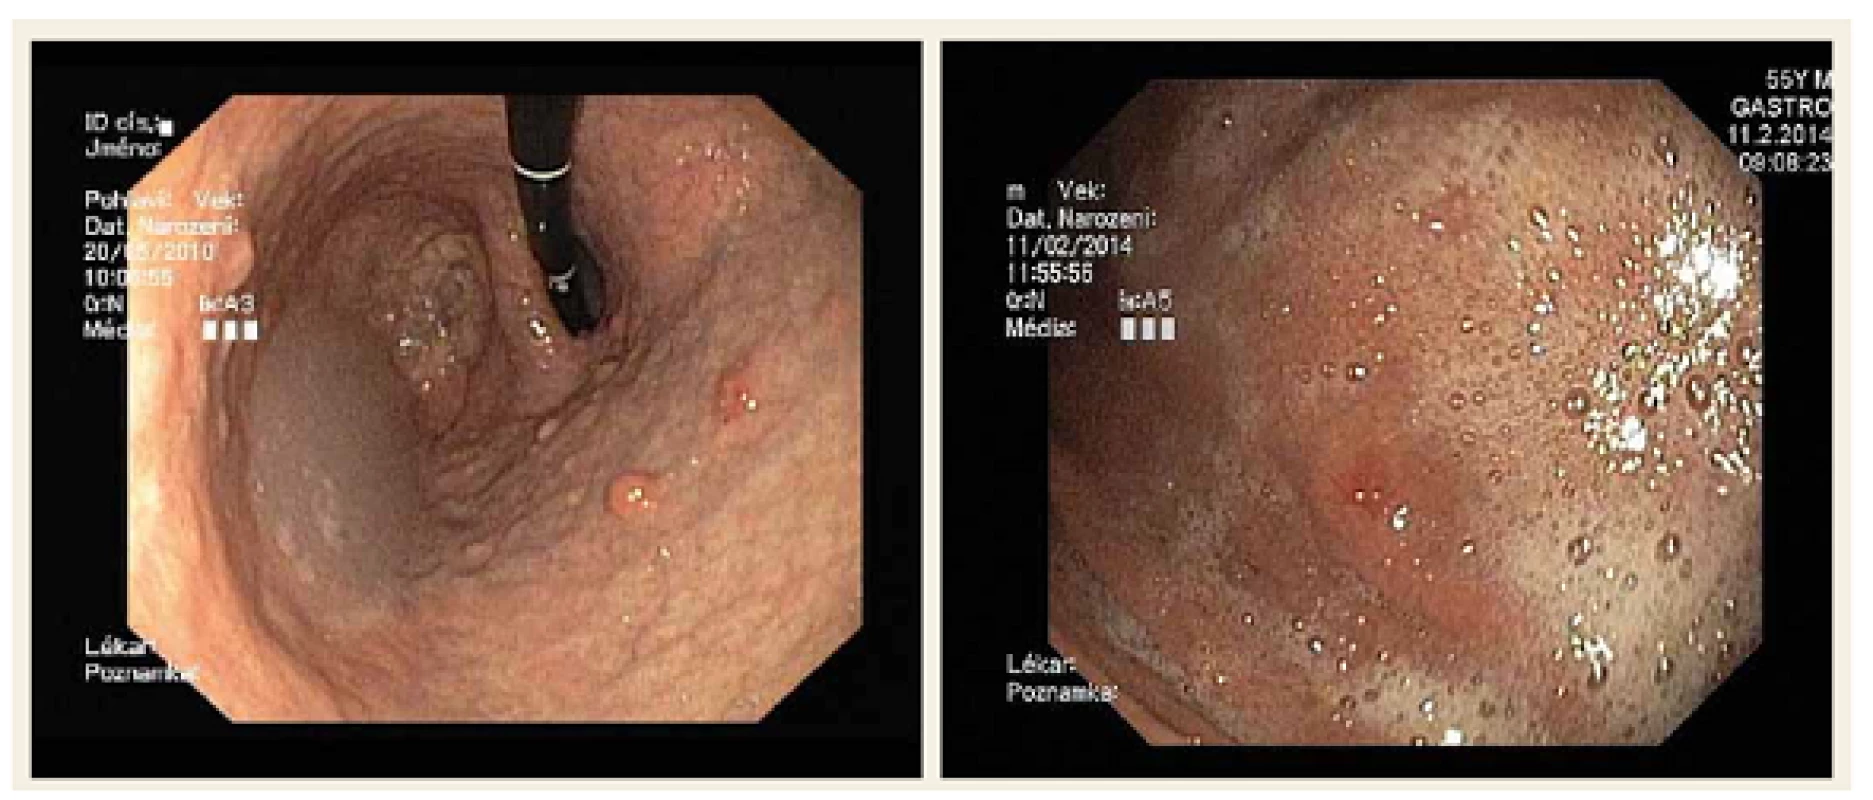 Neuroendokrinní nádor žaludku.
Fig. 1. Neuroendocrine tumour of the stomach.